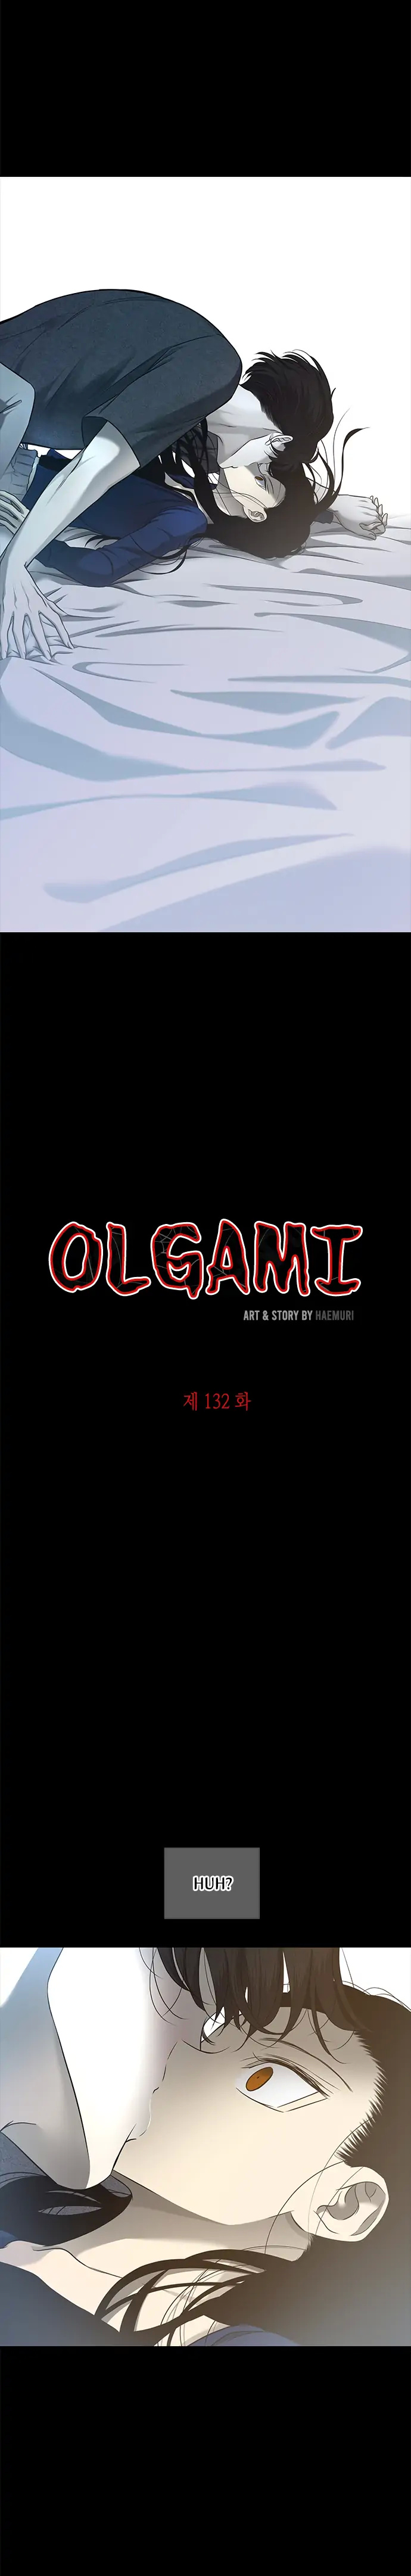 Olgami - Page 1